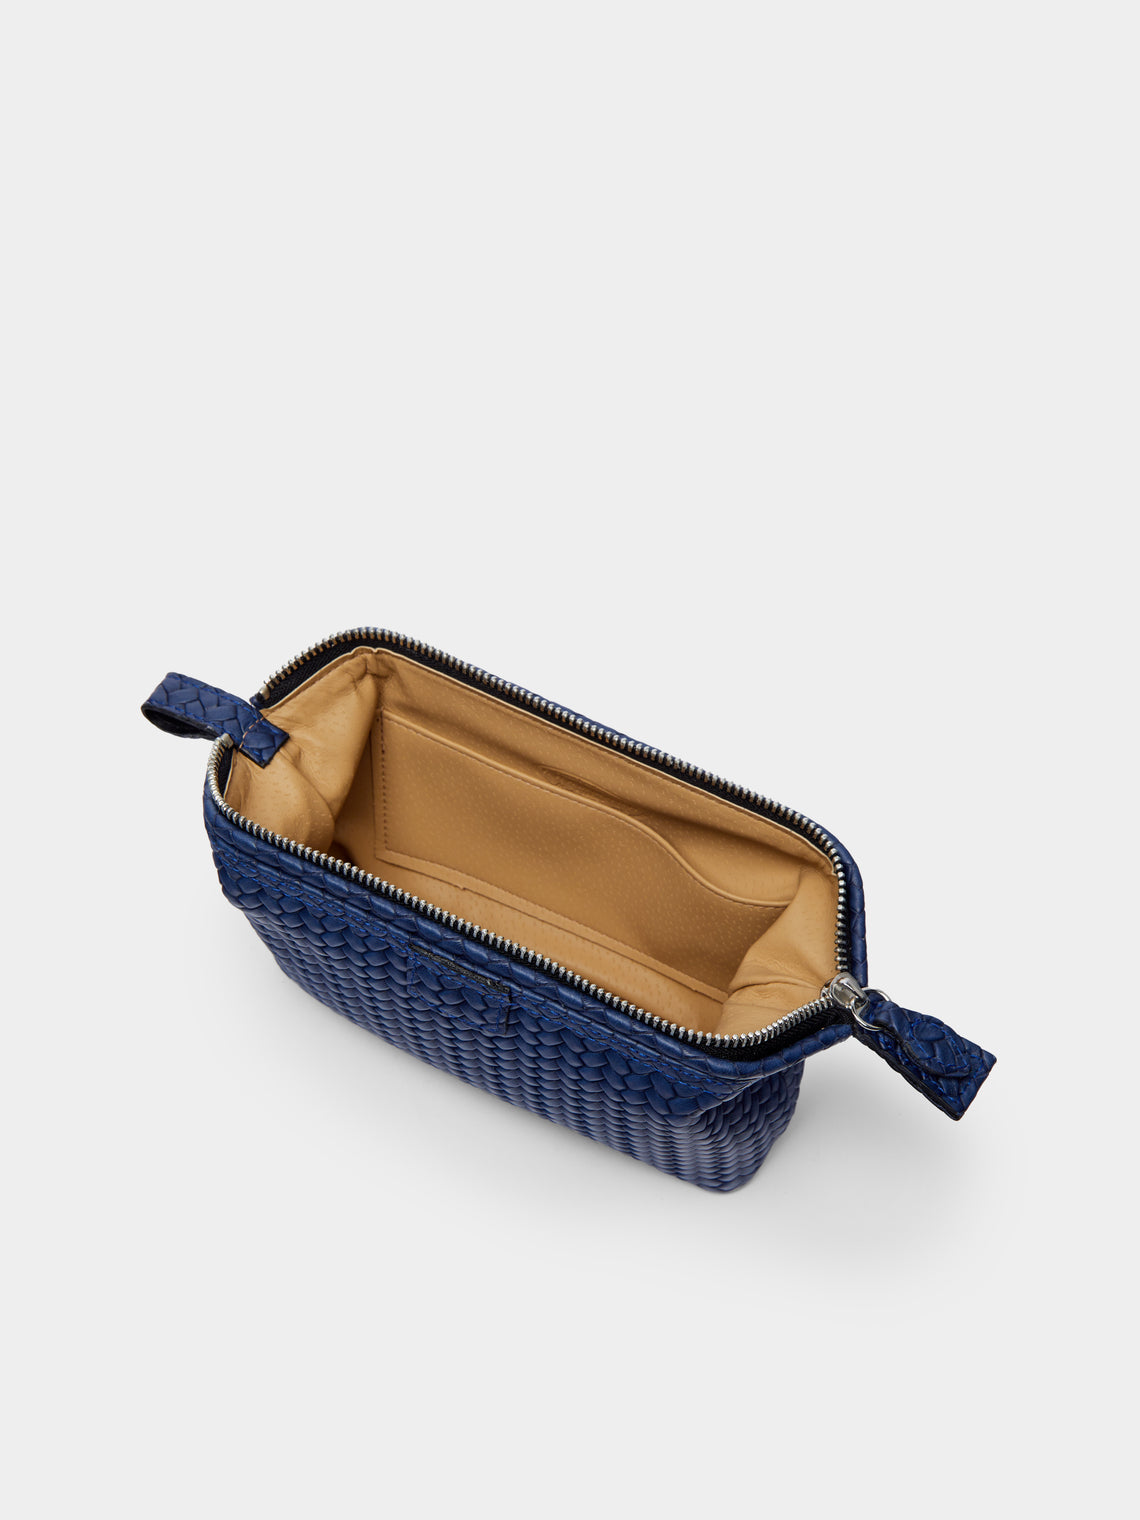 F. Hammann - Leather Small Wash Bag -  - ABASK